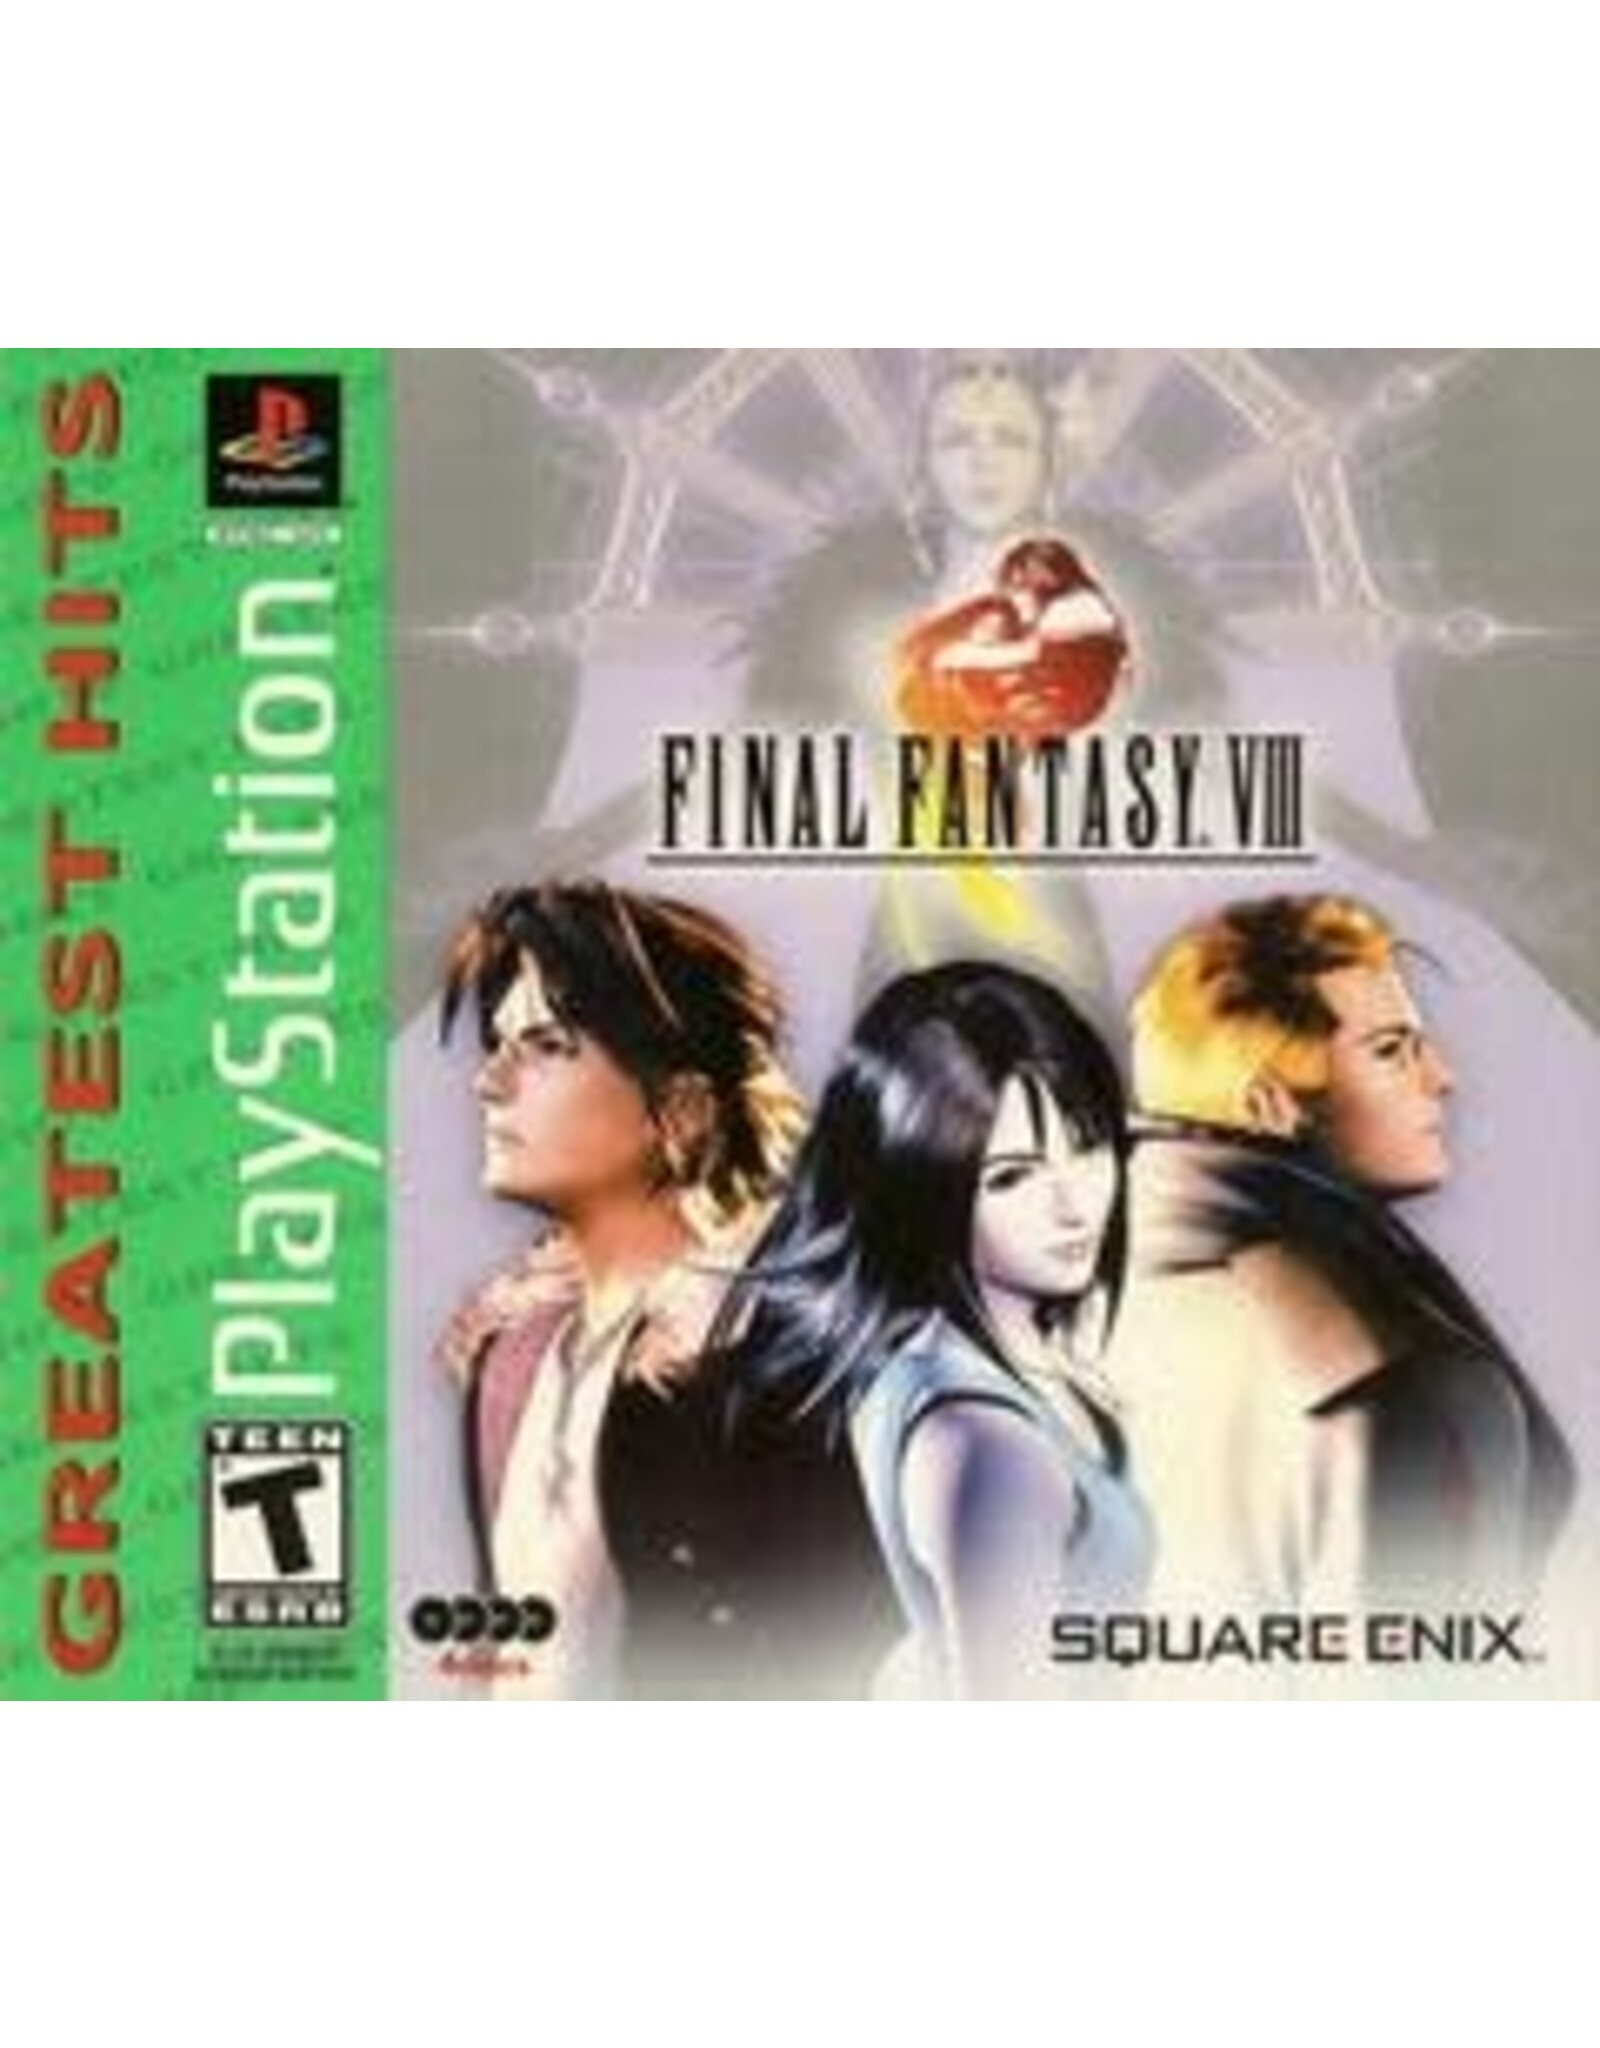 Playstation Final Fantasy VIII (Greatest Hits, CiB)